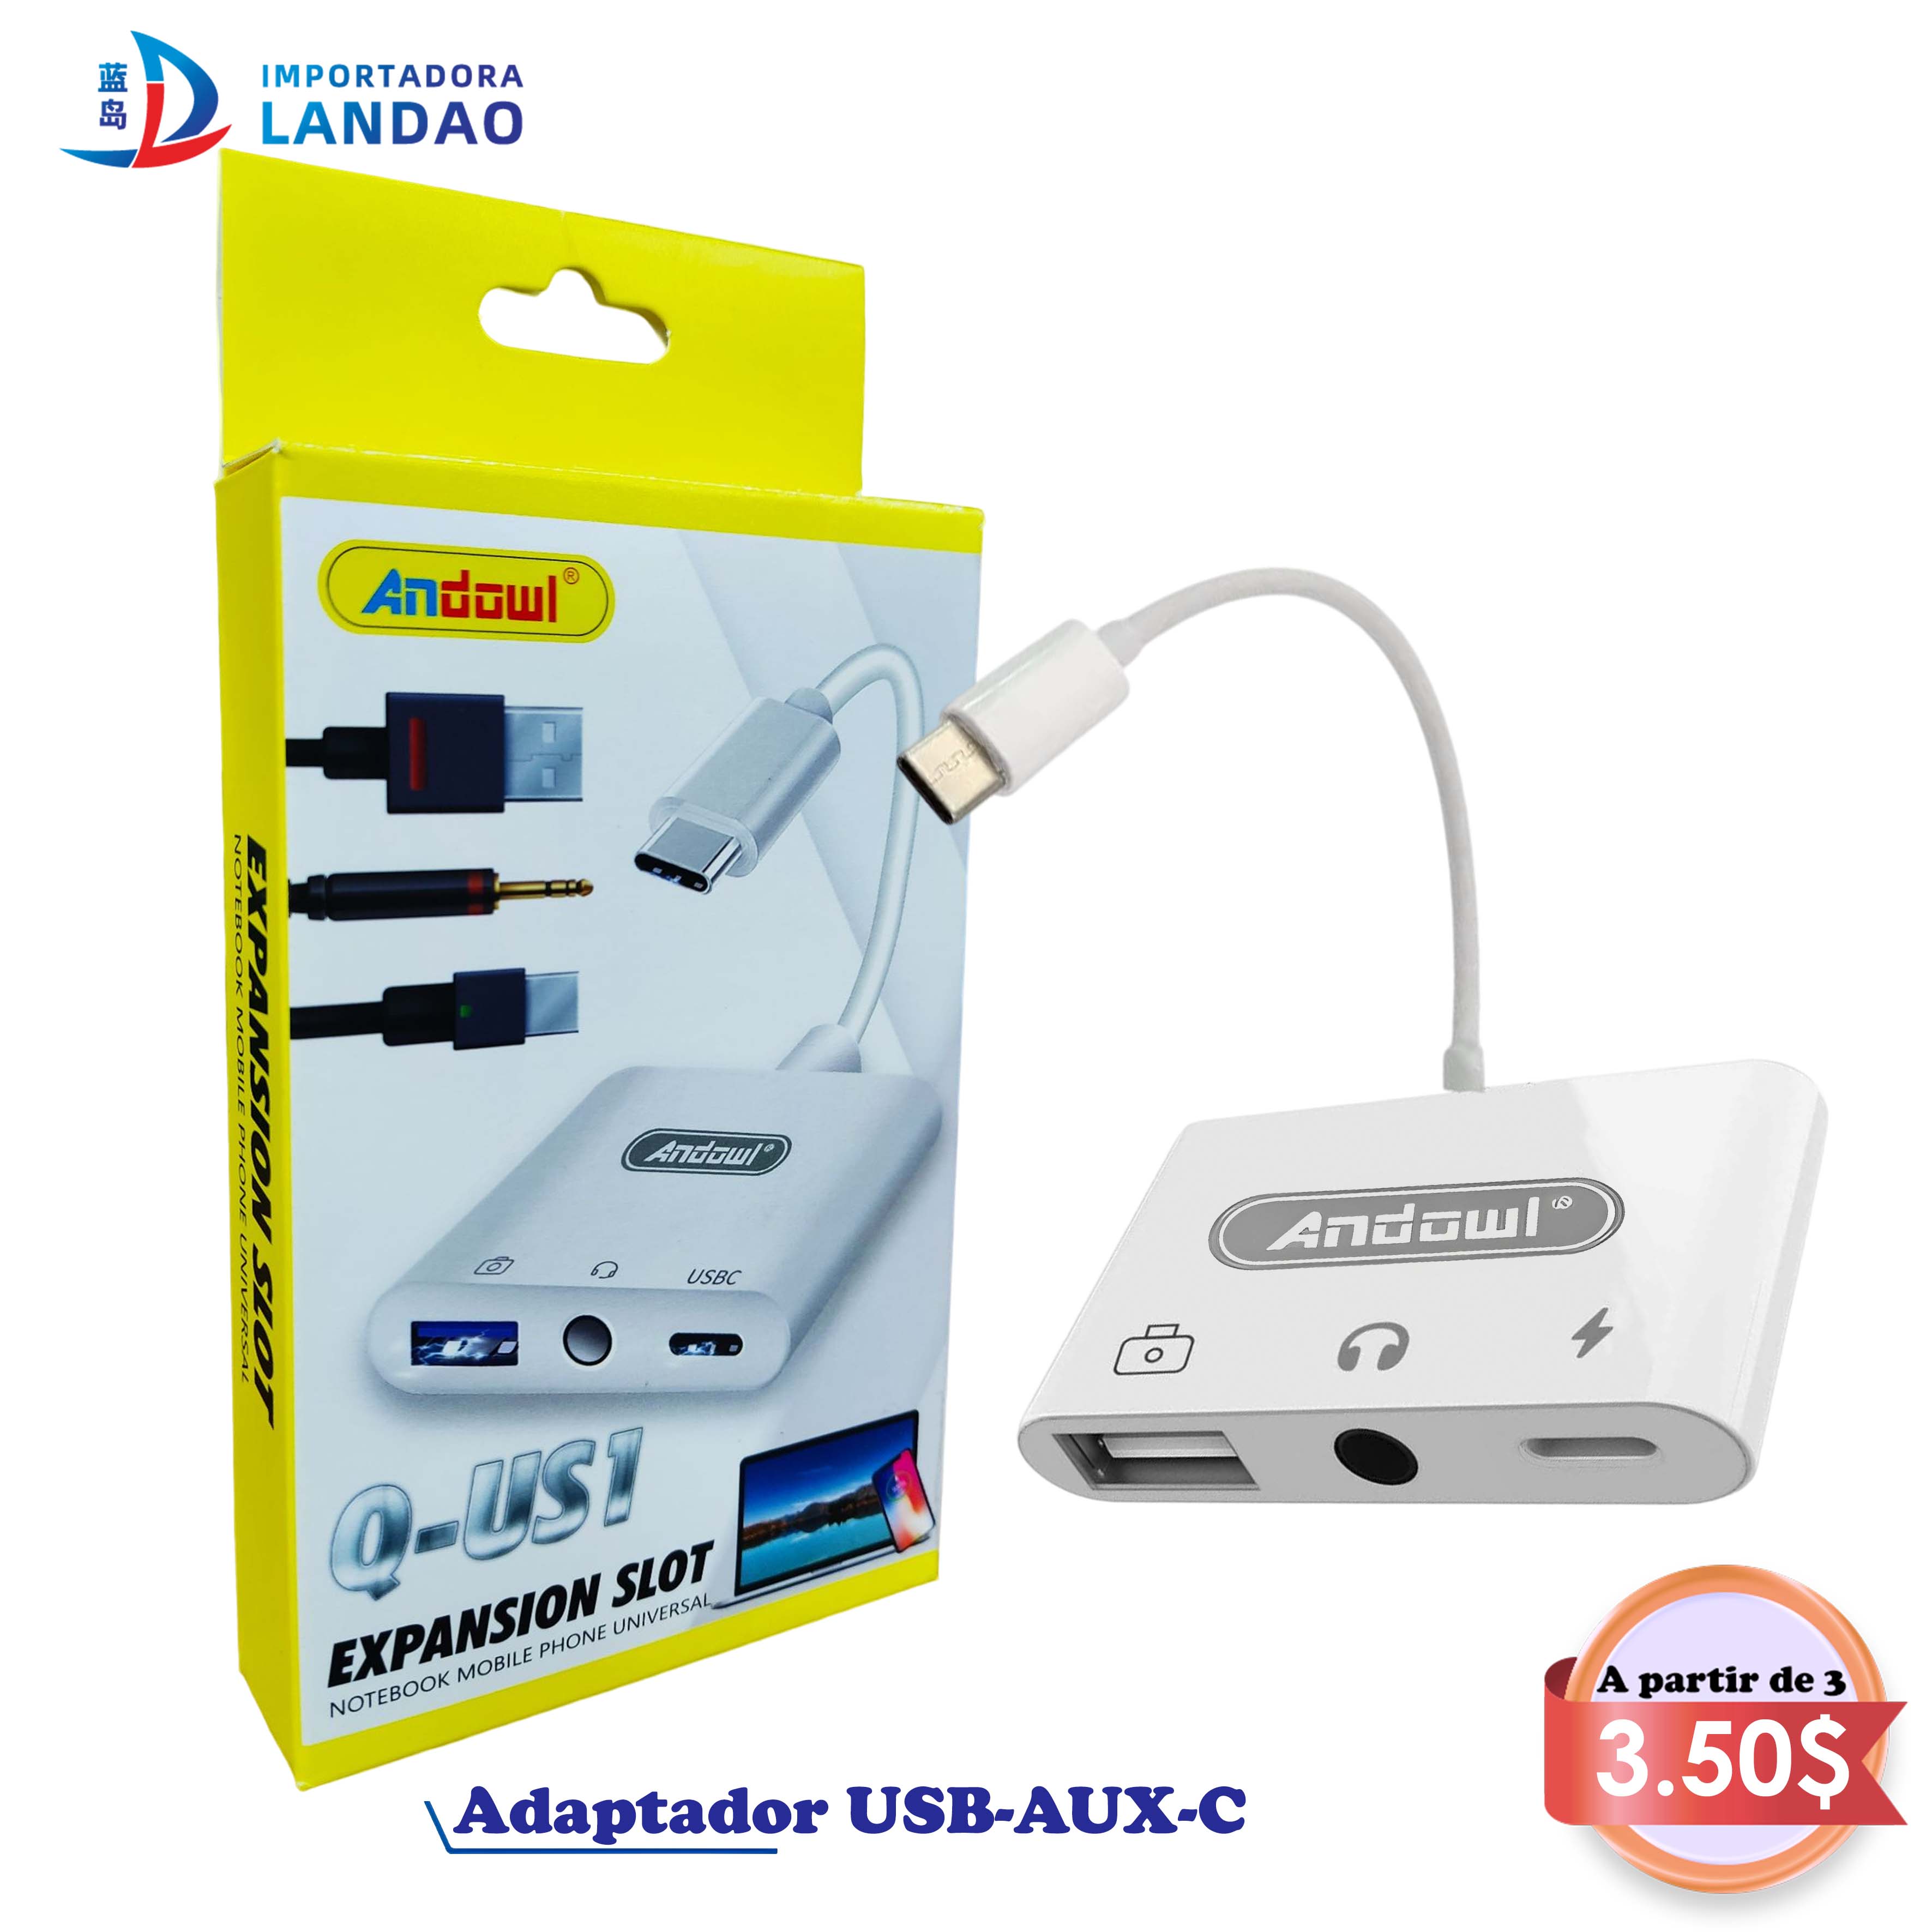 Importadora Andowl • Regleta USB 3.0 8 en 1 Andowl